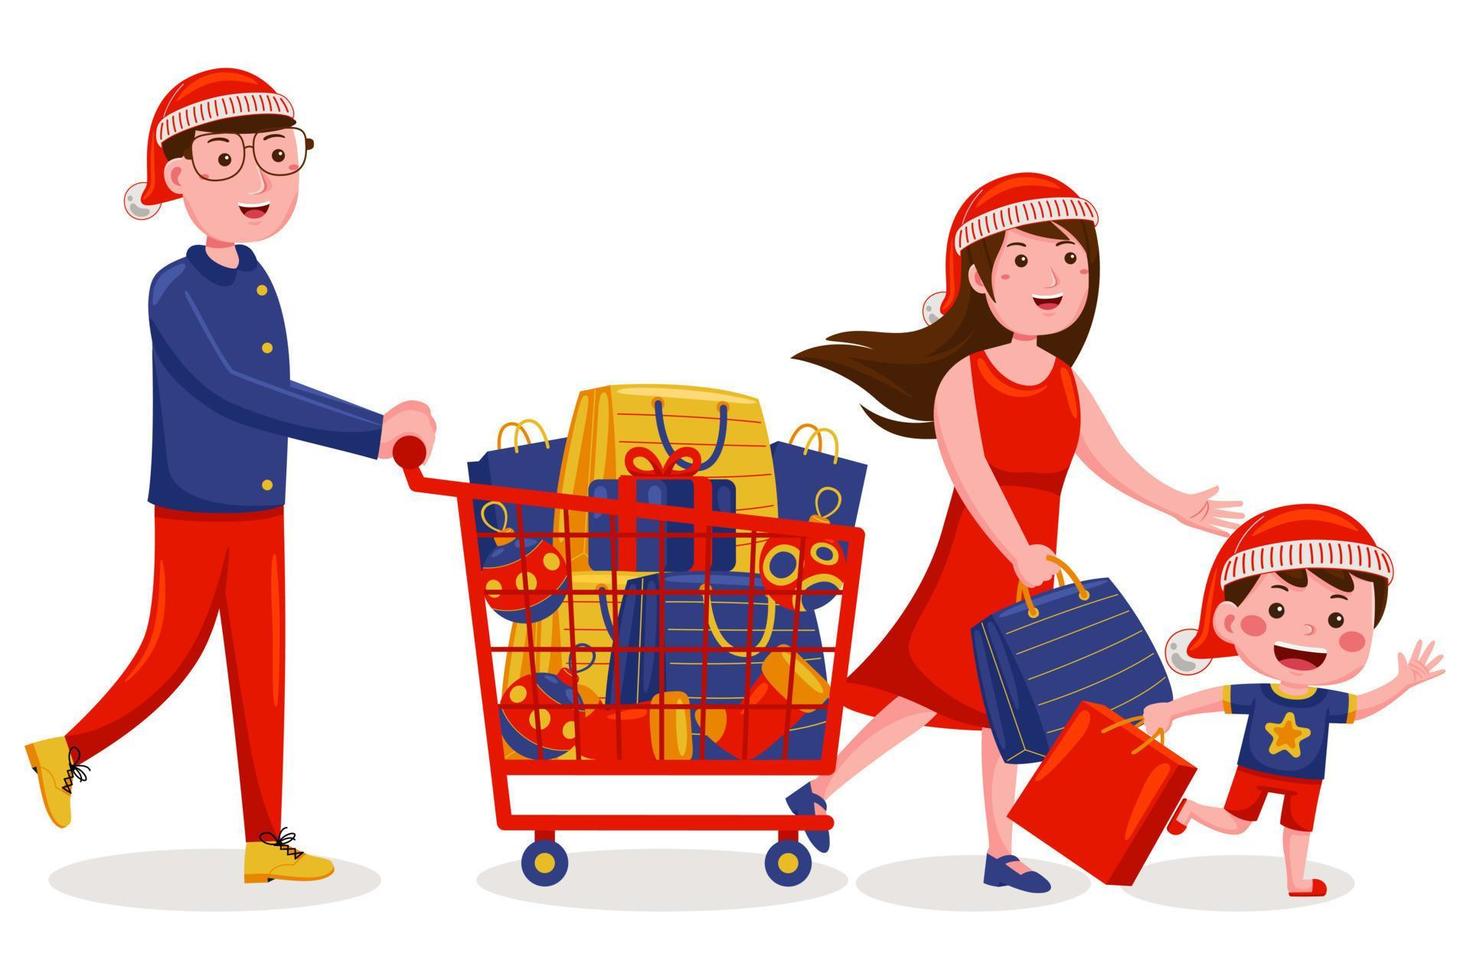 Family Shopping Christmas Sale Vector Illustration